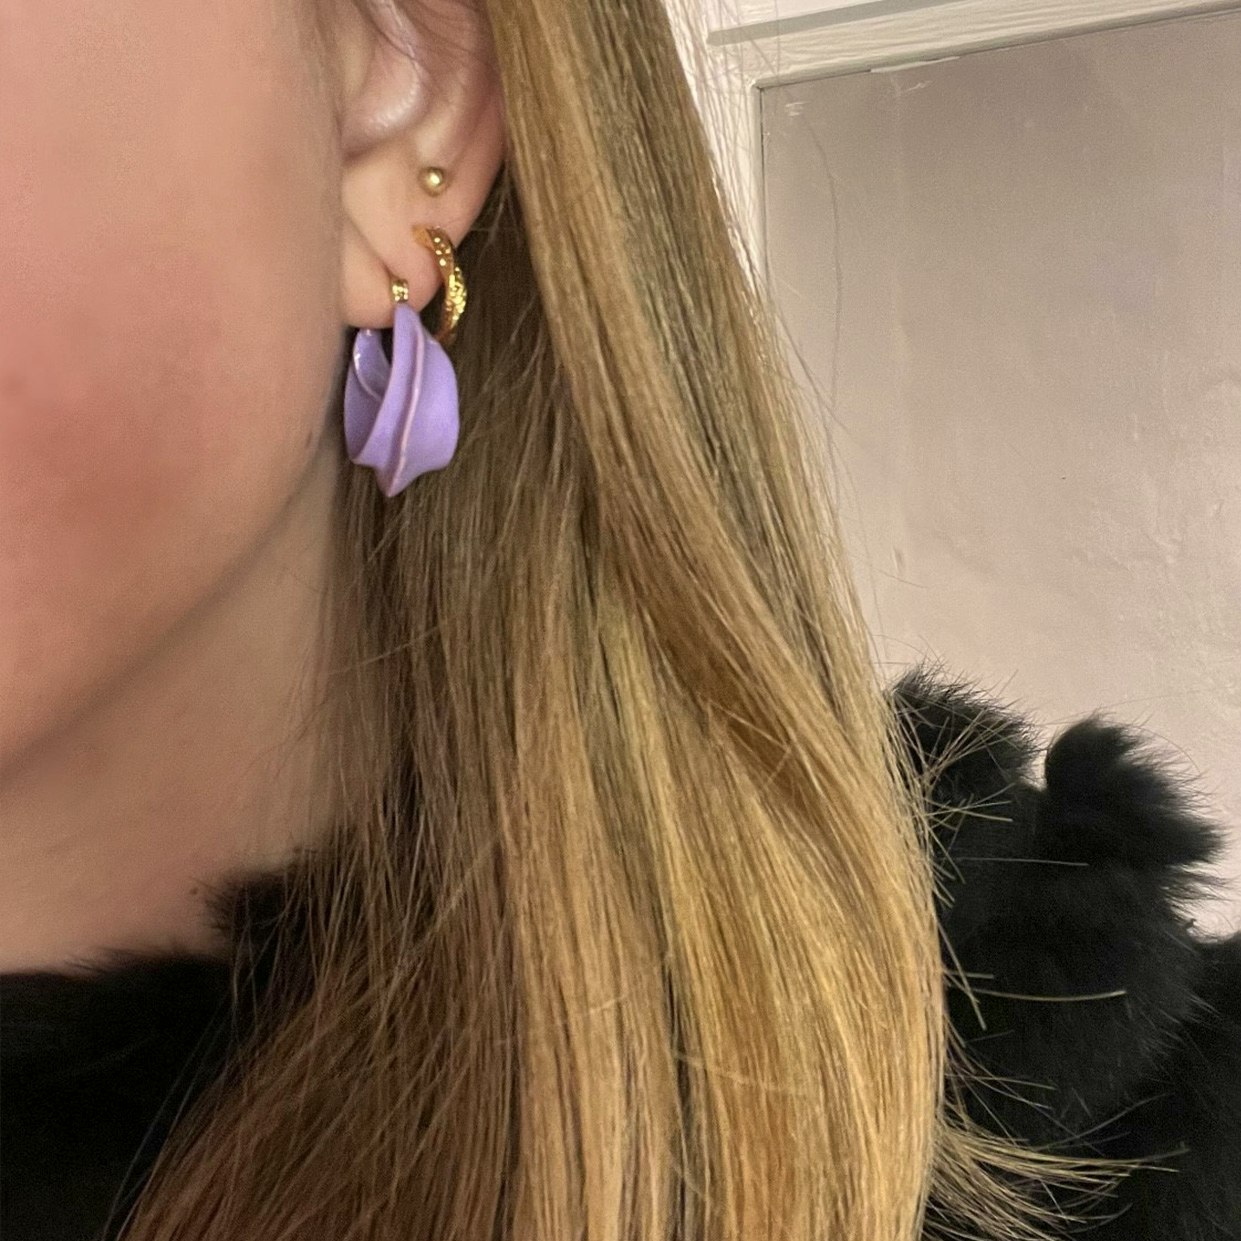 Africa Enamel Earrings Lavender